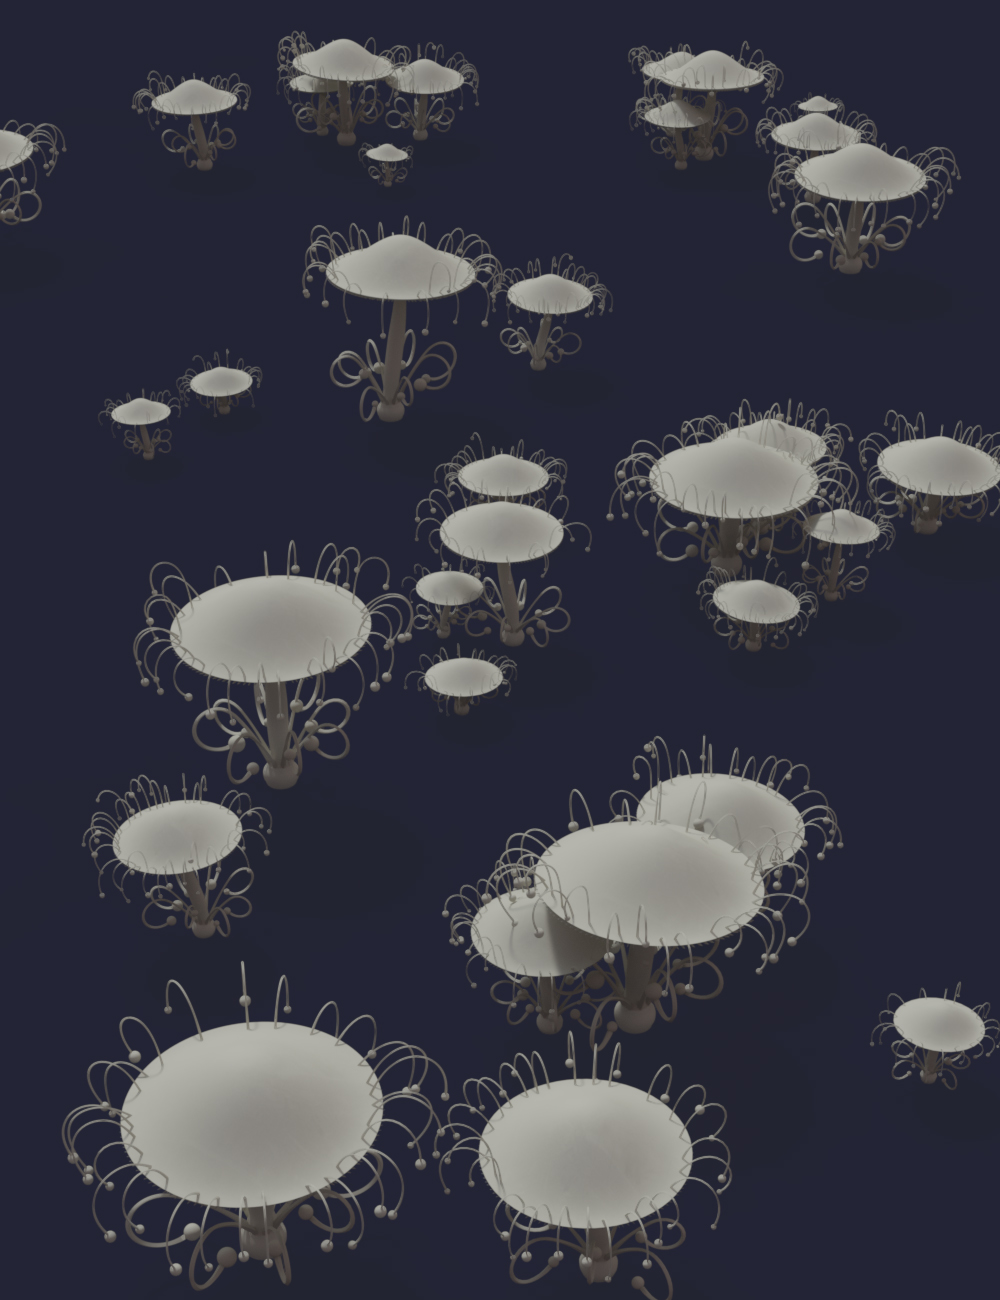 Mystical Mushroom - Fabulous Fungi by: MartinJFrost, 3D Models by Daz 3D